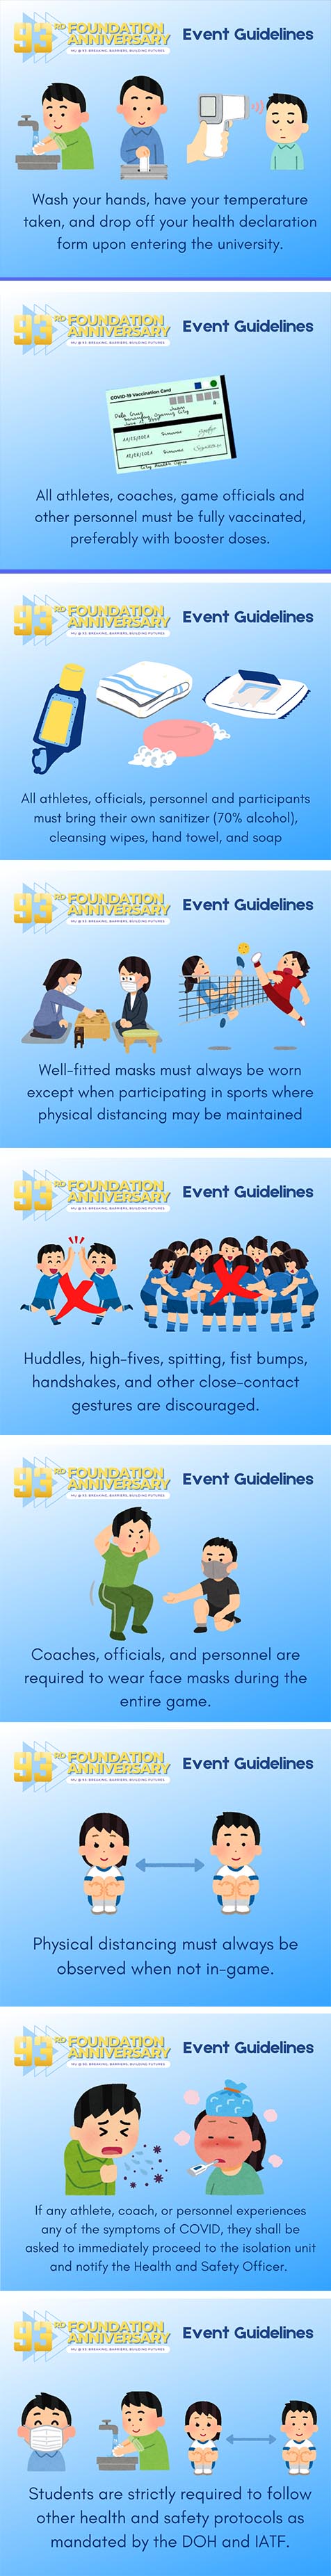 Event Guidelines 93rd Foundation Anniversary Celebration - Misamis University